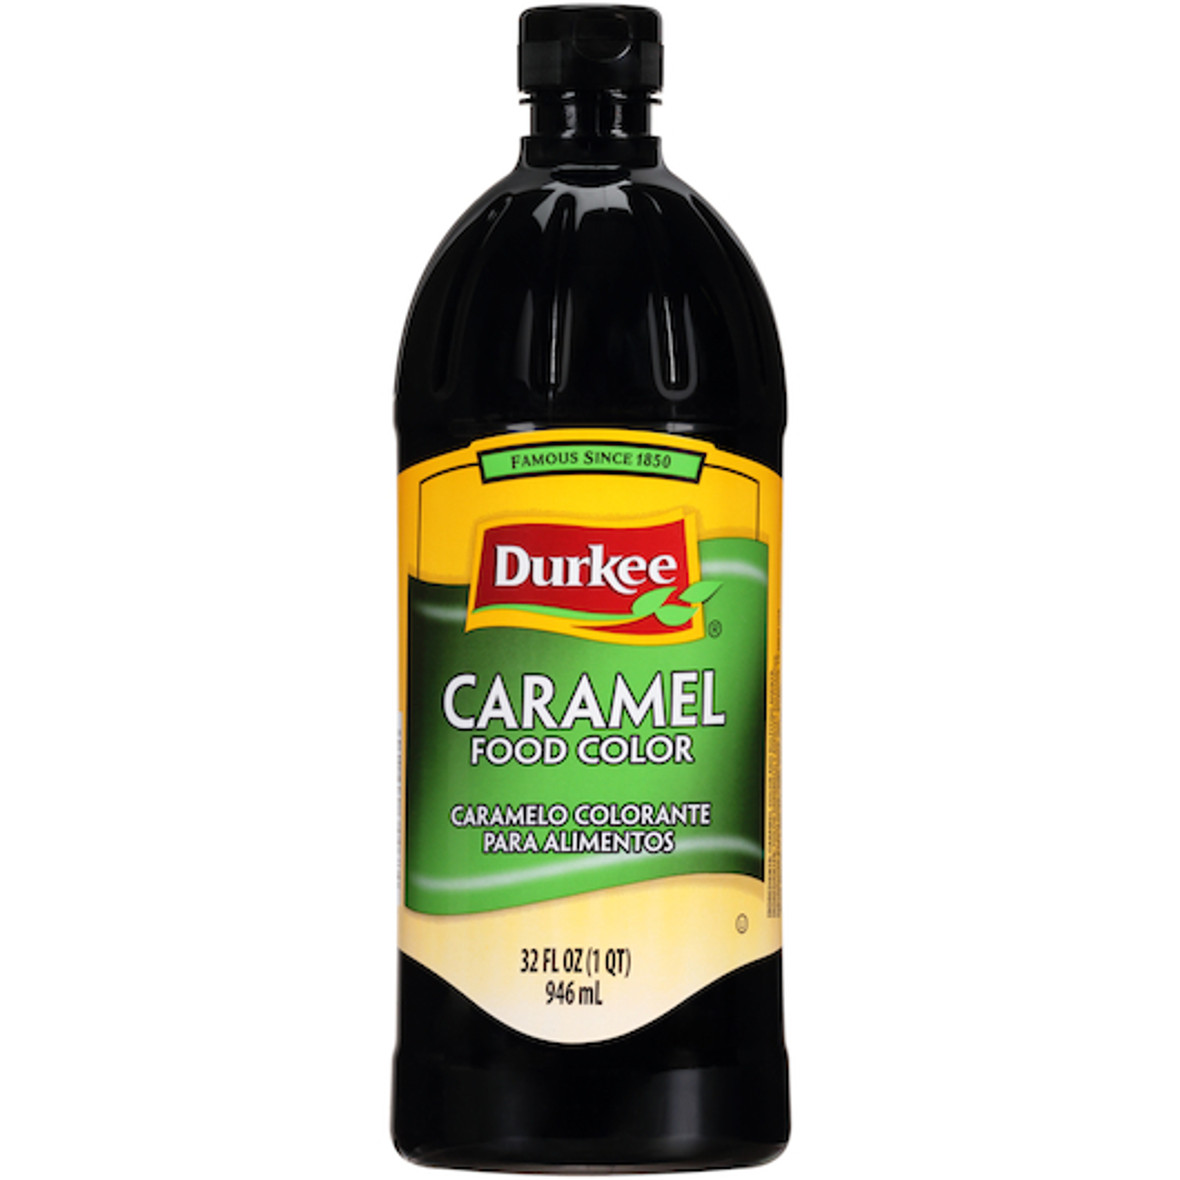 Durkee Caramel Food Color